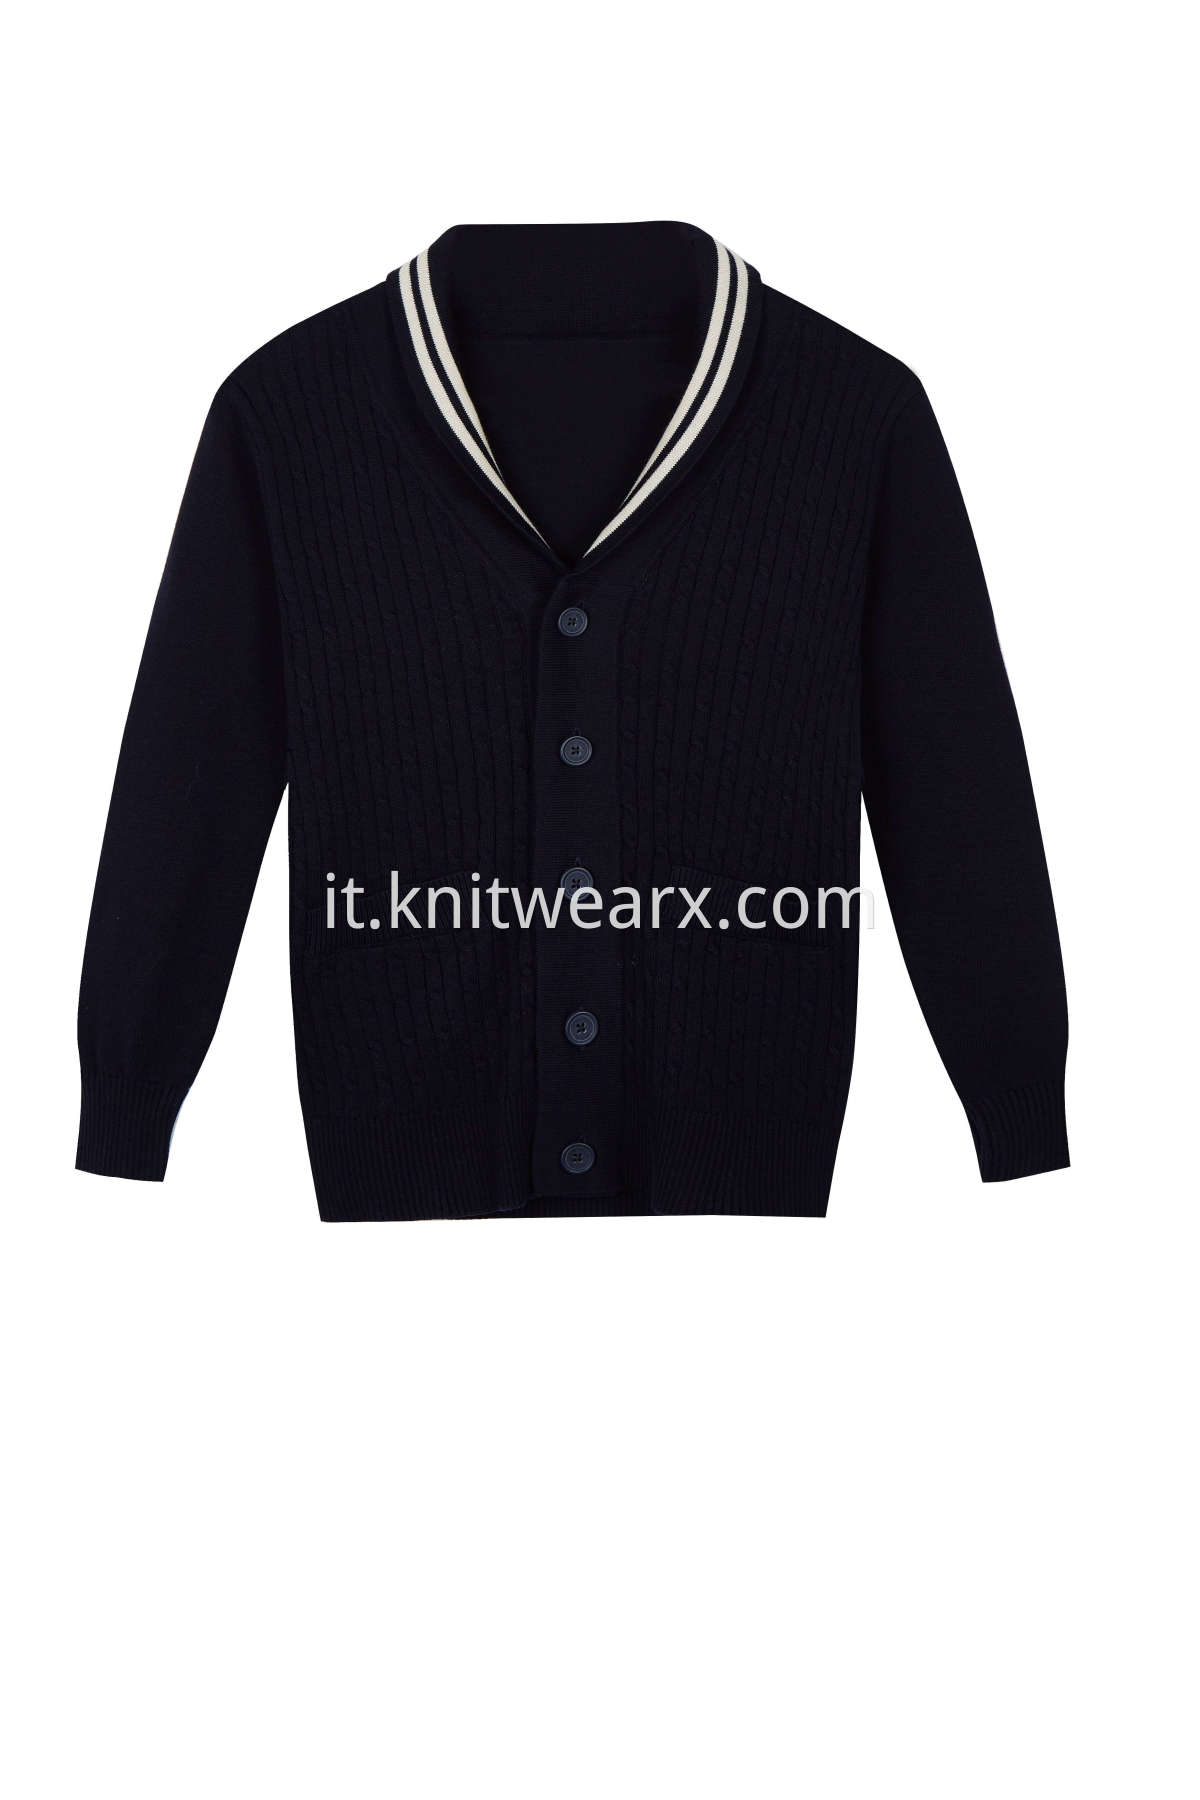 Kids's Sweater Vest Cotton V-Neck School Uniform Pullover Sweater